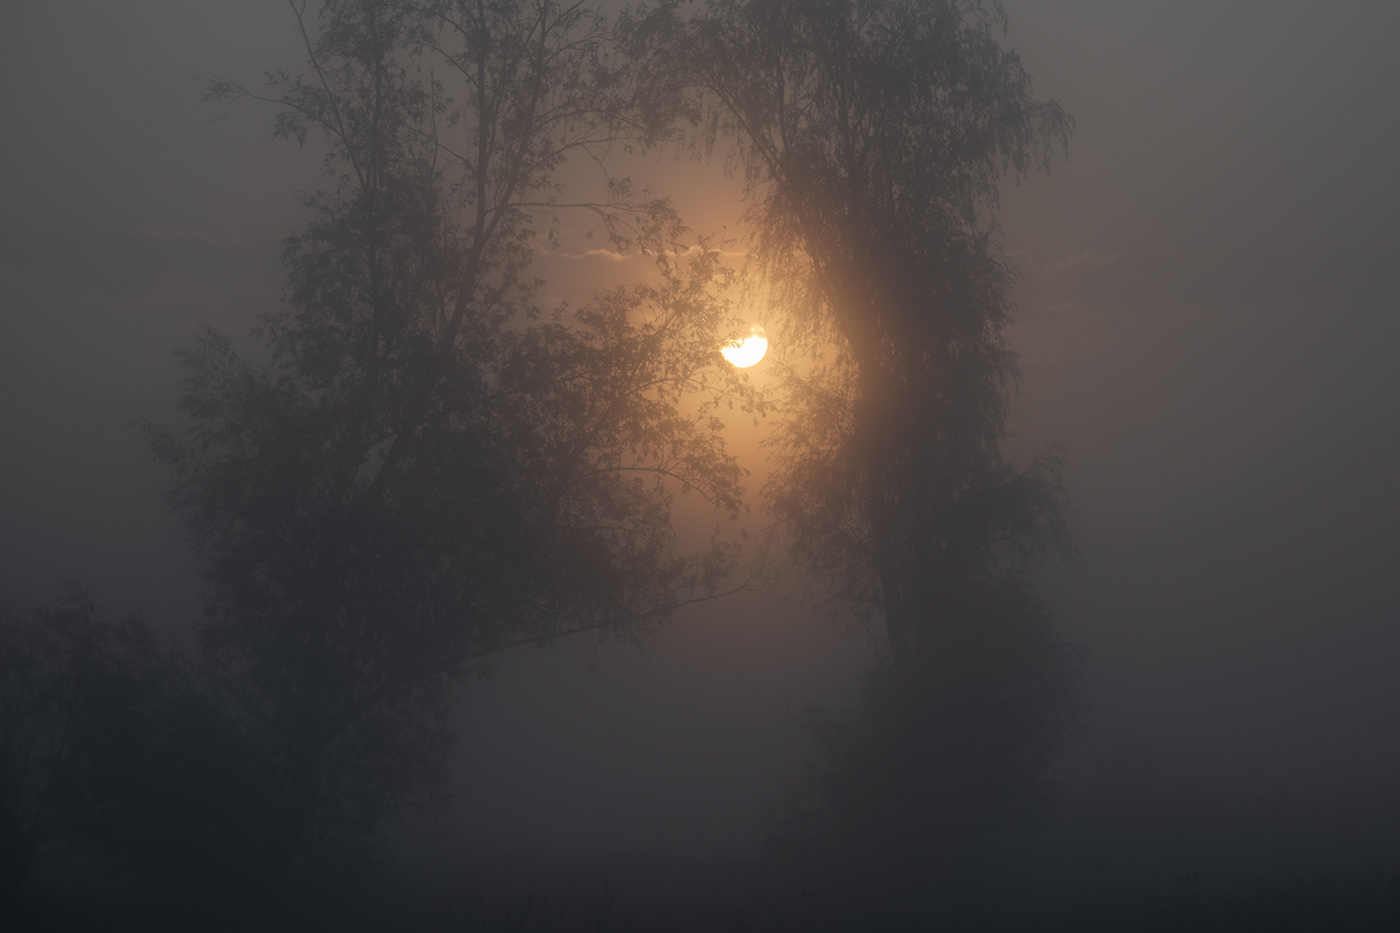 lietuva lithuania mist fog Landscape Nature Mindaugas Buivydas Nemunas Delta